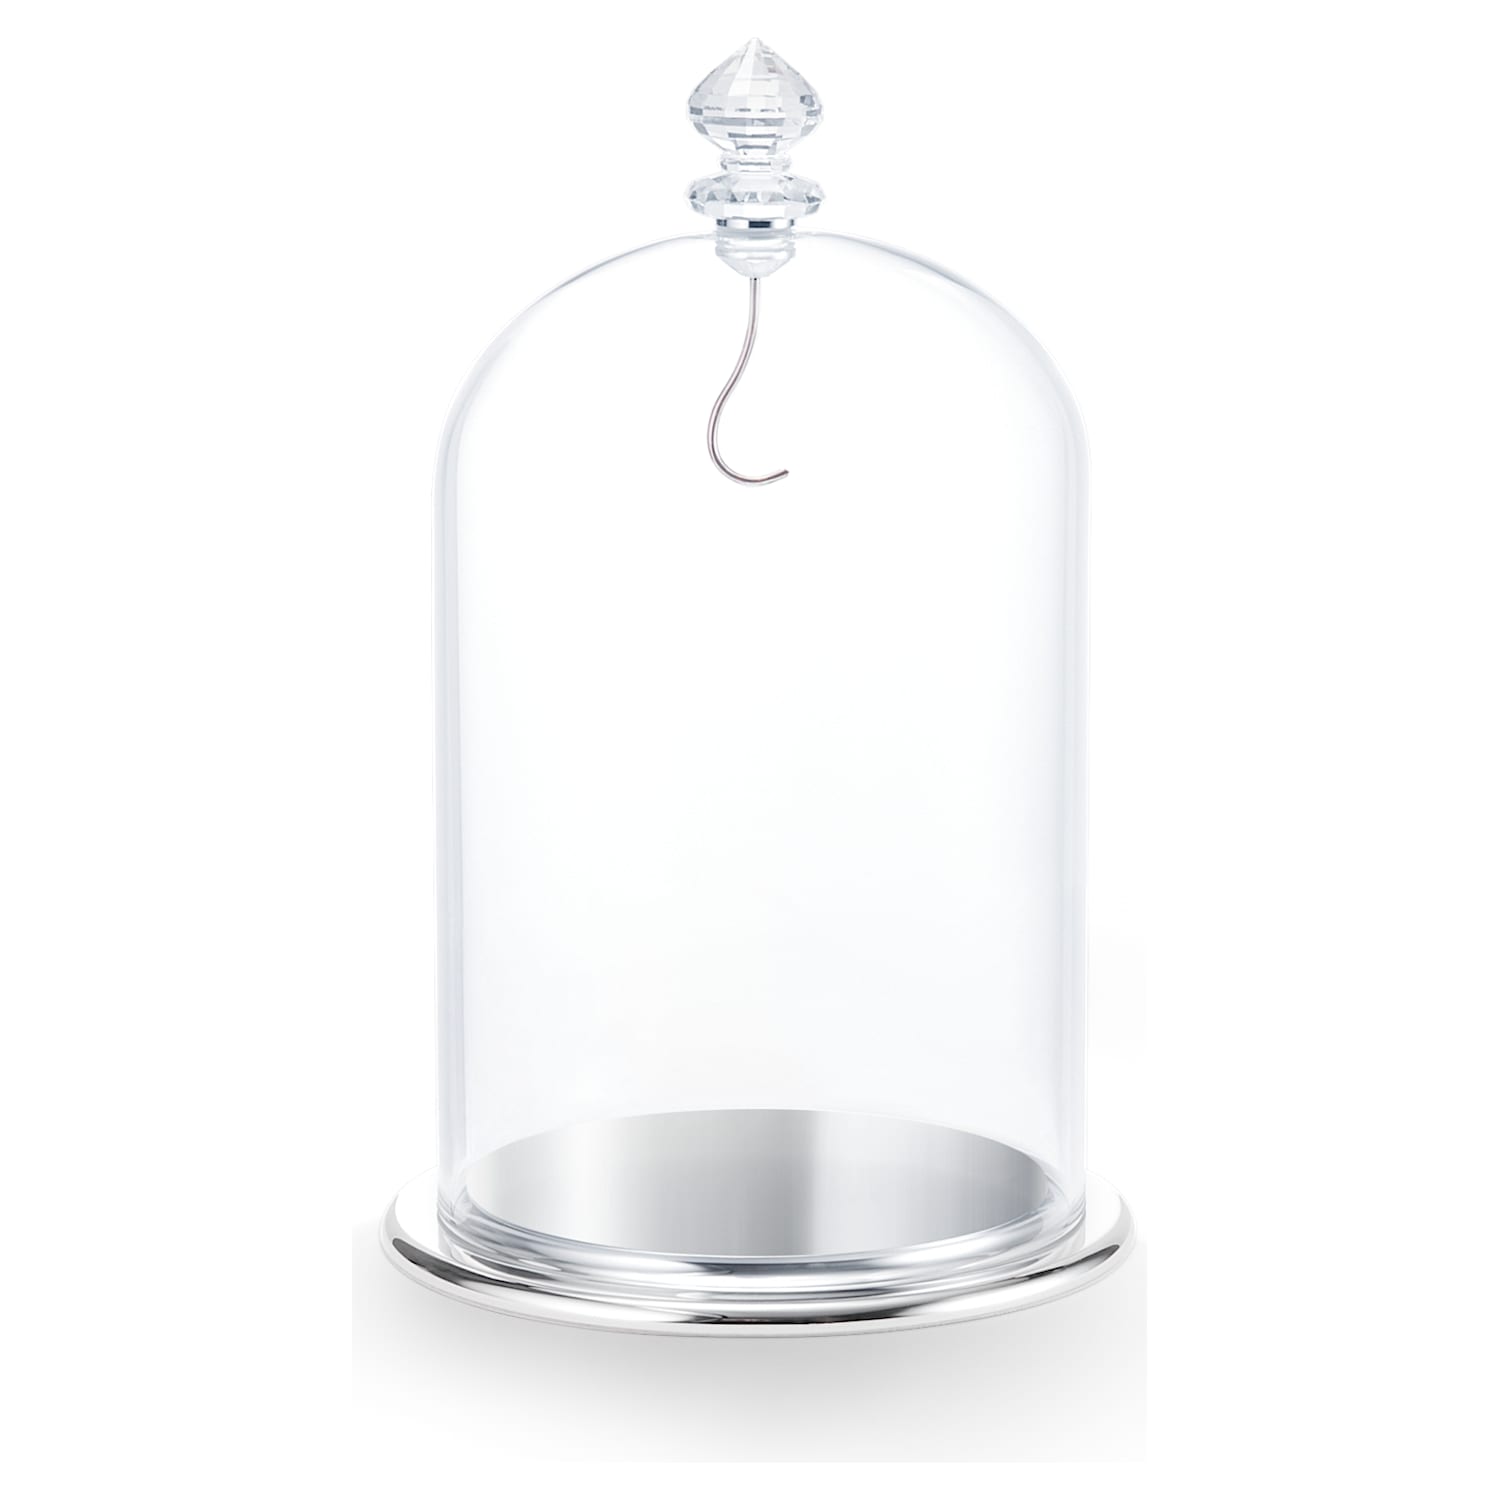 Bell jar